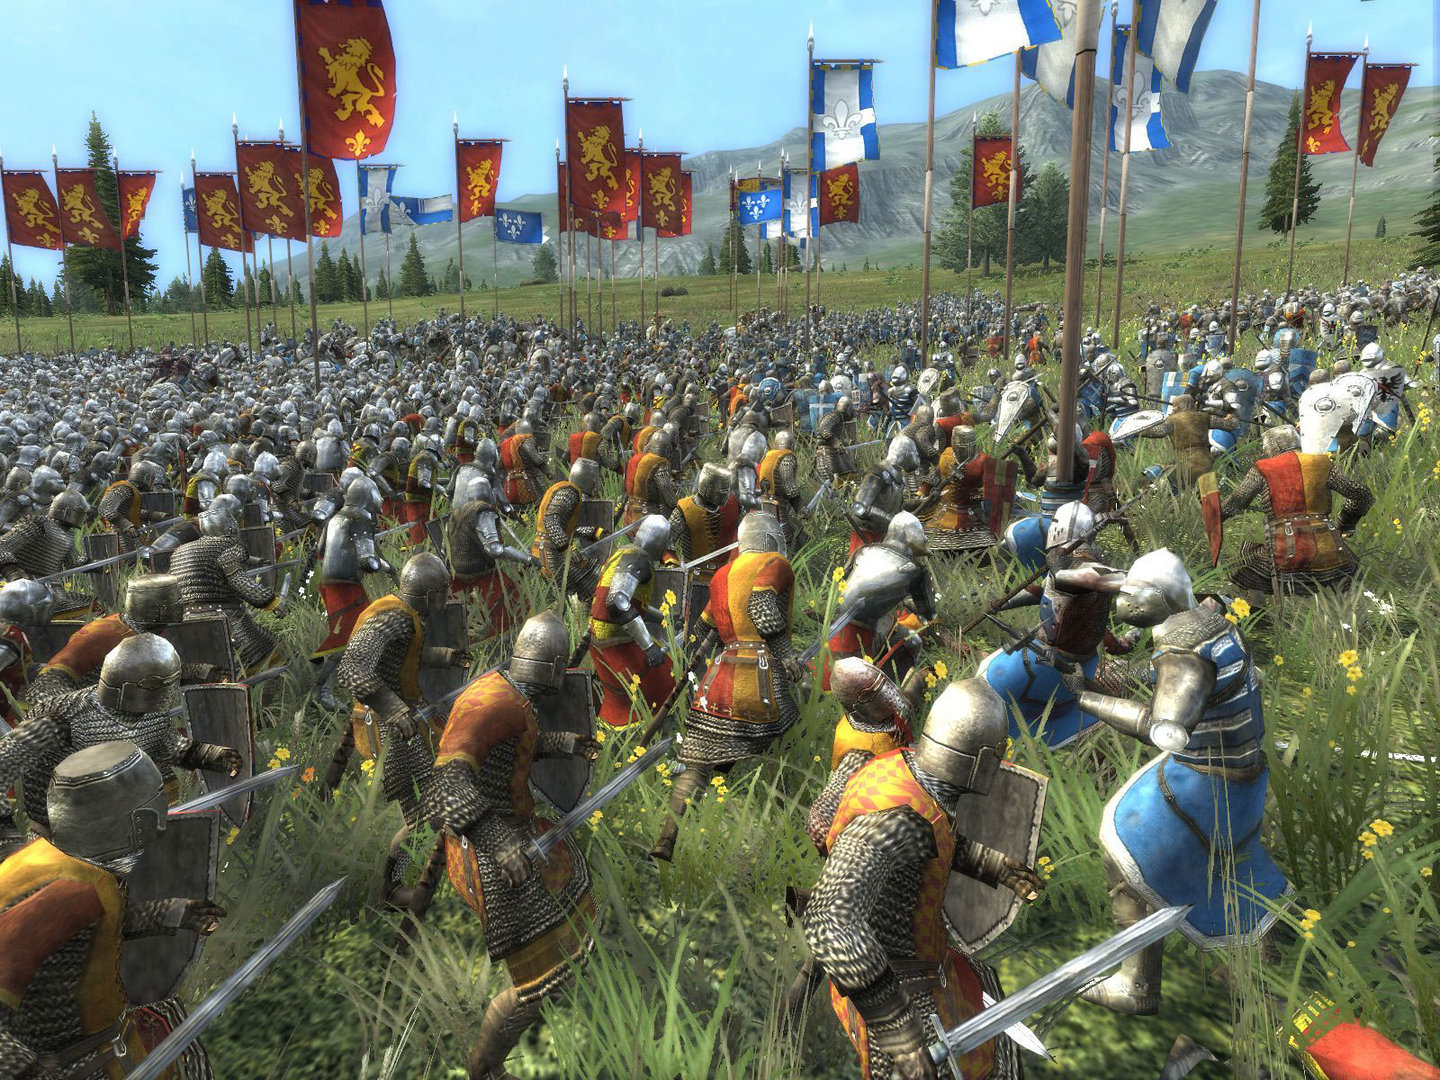 medieval total war 2 traits